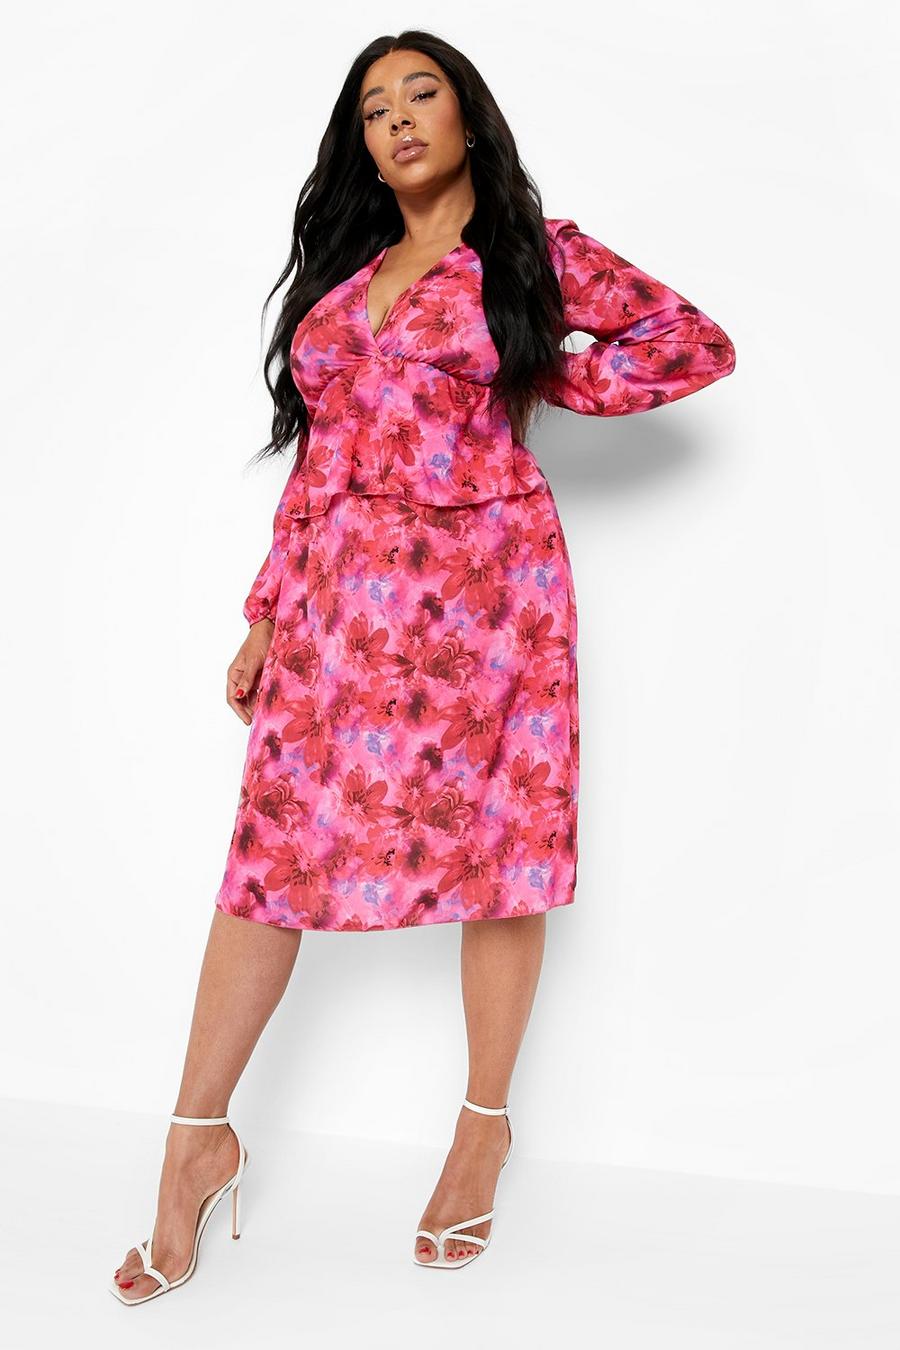 Grande taille - Robe portefeuille volantée à imprimé fleuri, Hot pink image number 1